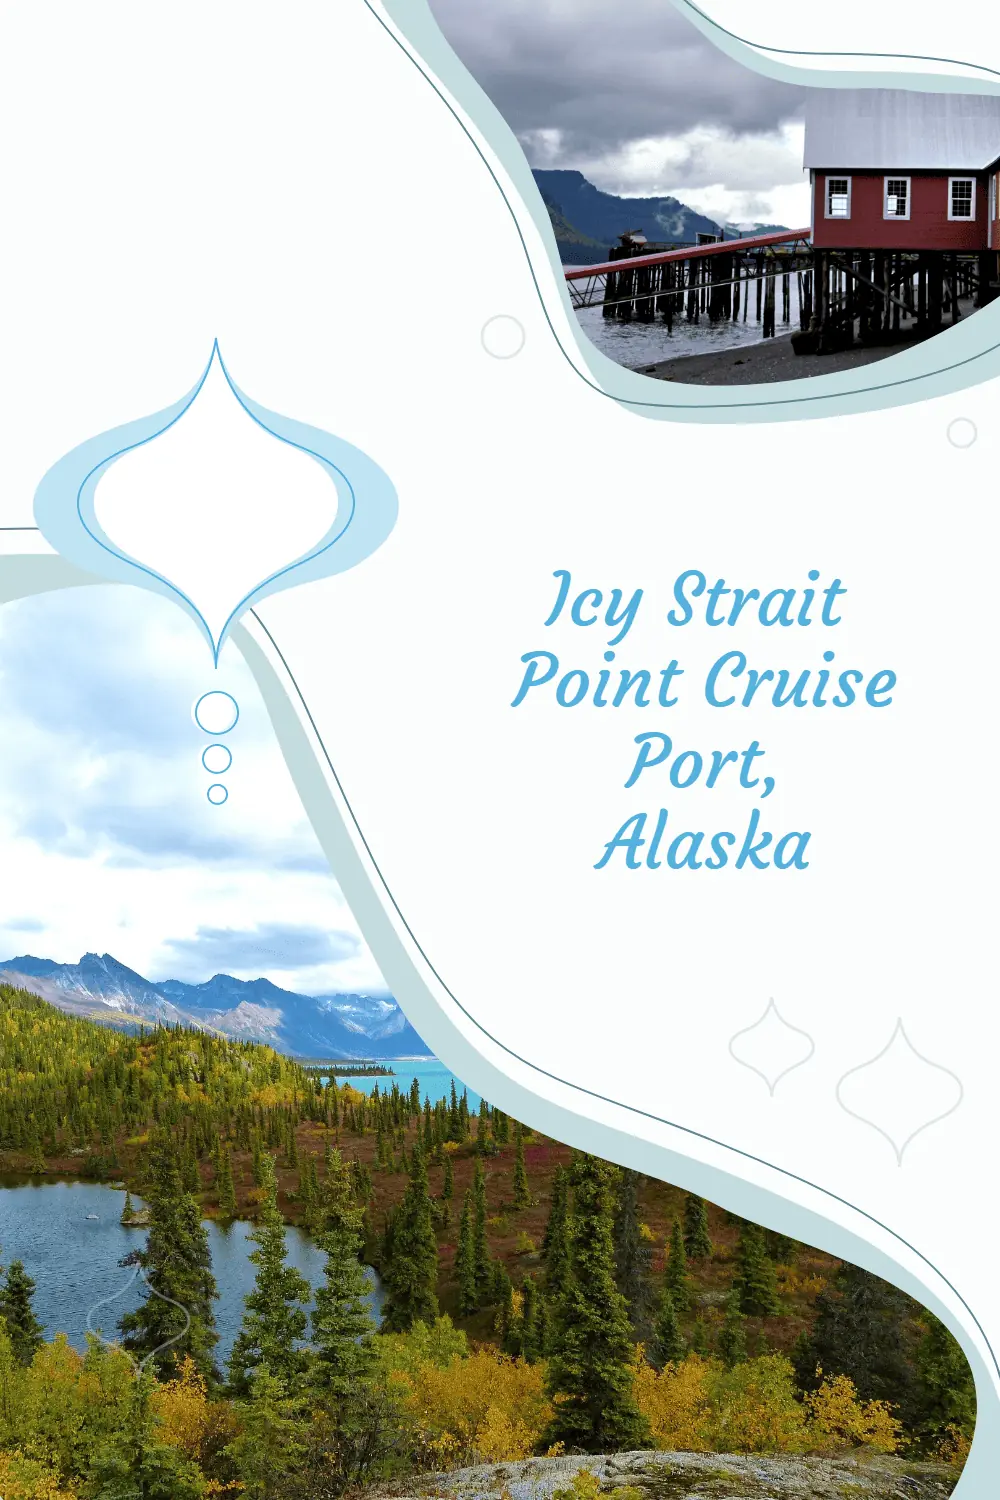 Read on to plan your visit to Hoonah, or Icy Strait Point, Alaska. #AlaskaCruising #cruiseAlaska @rccl #royalcaribbeancruise